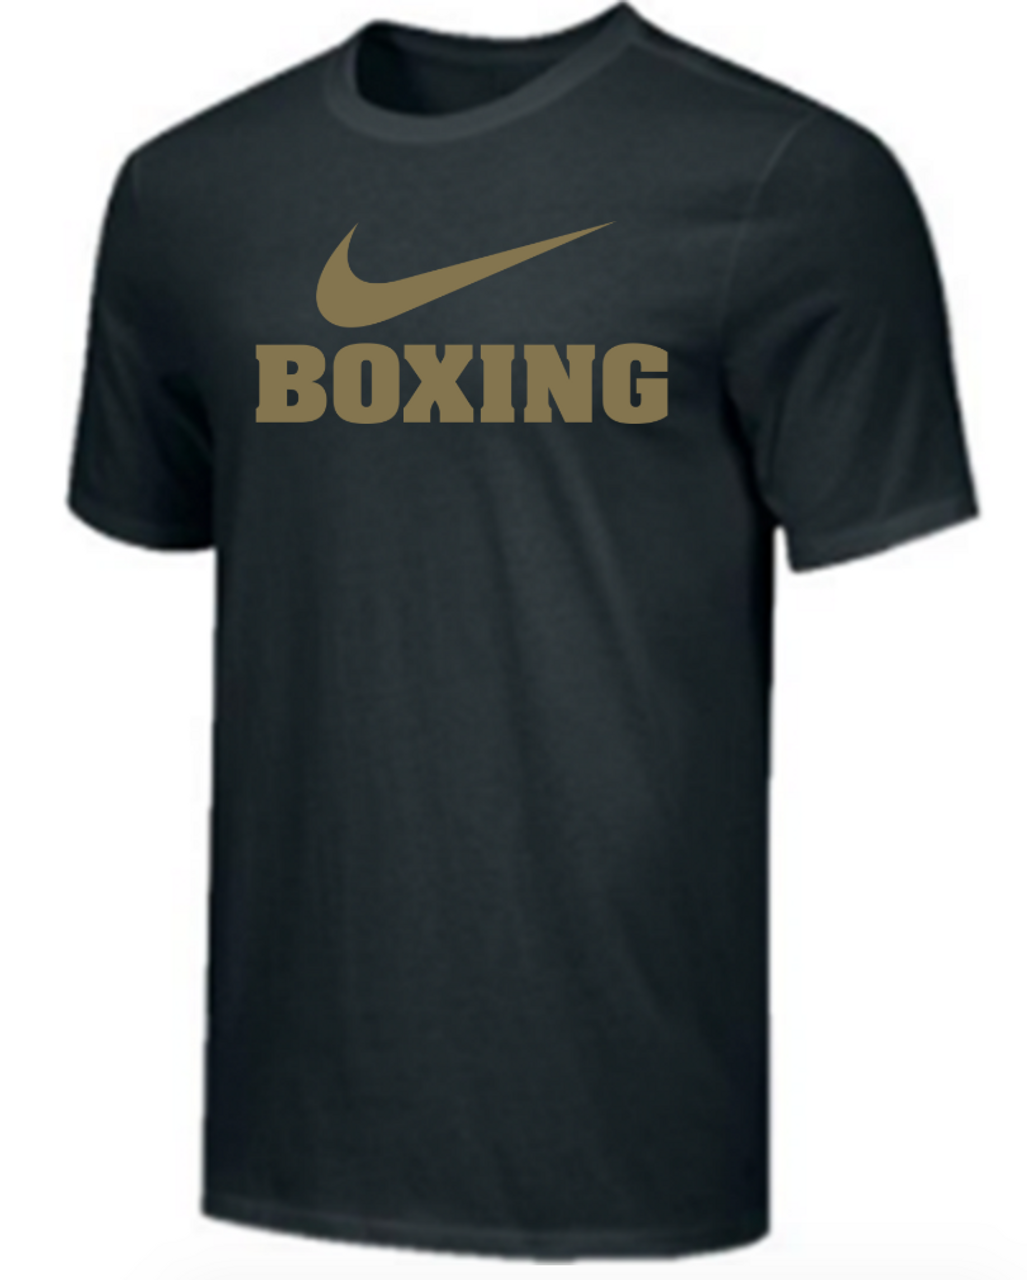 Men's Boxing Tee - Black/Gold